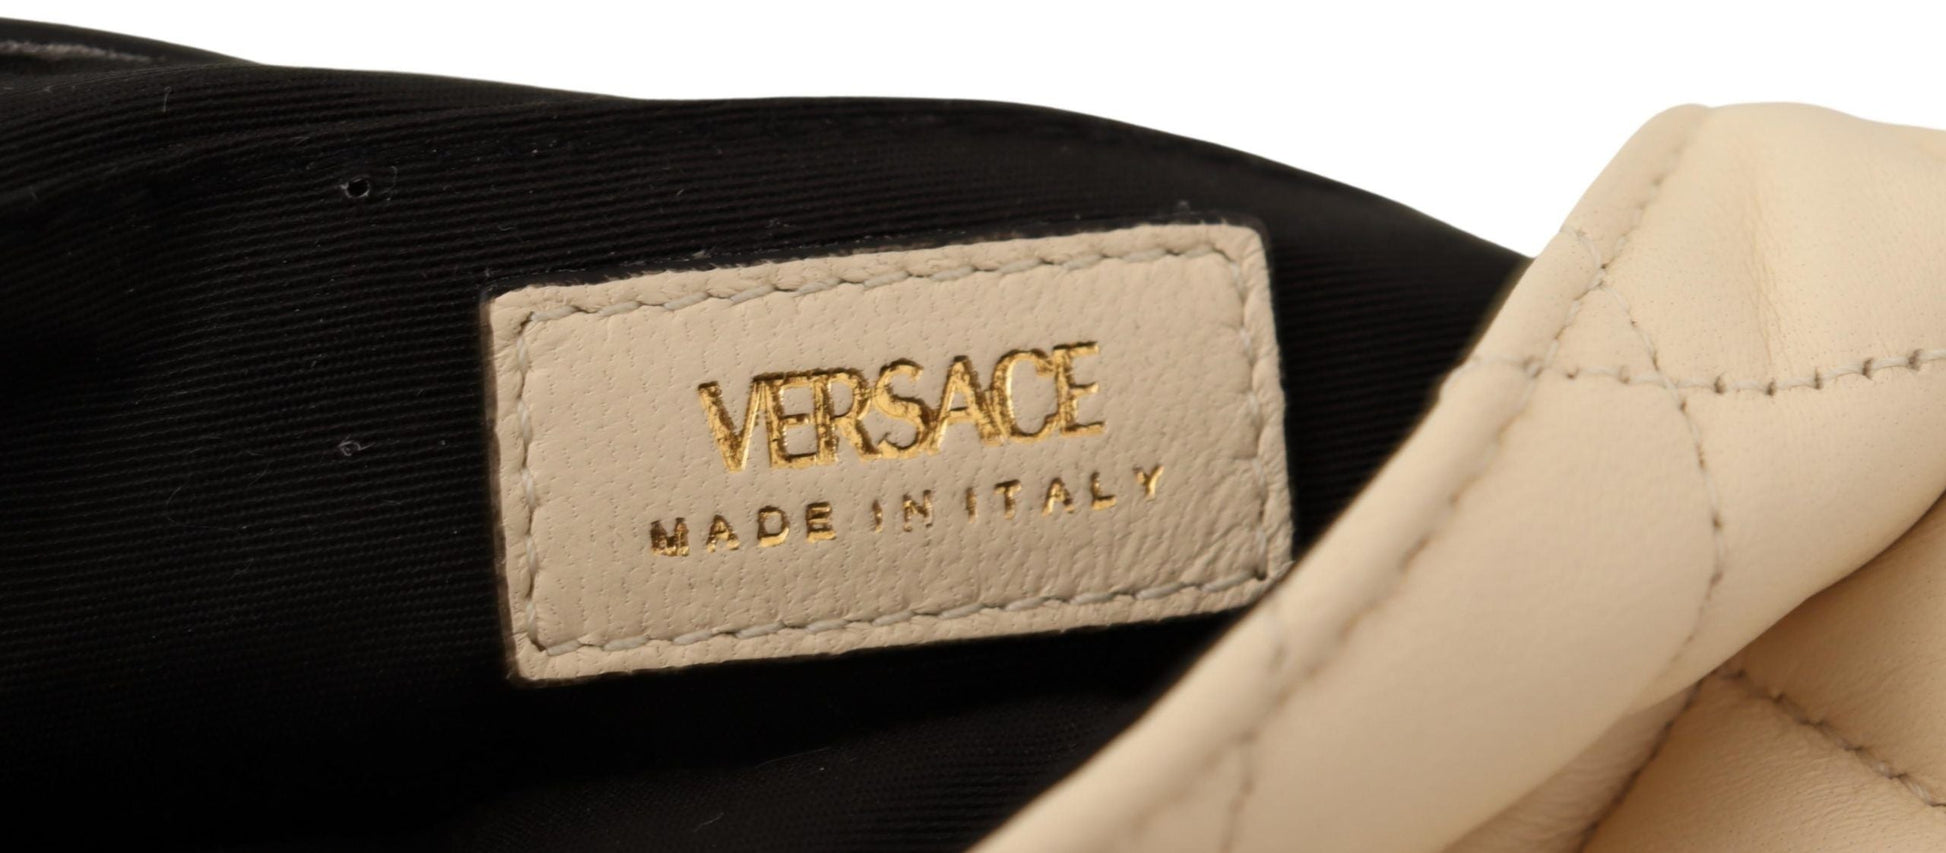 Fashionsarah.com Fashionsarah.com Versace White Nappa Leather Medusa Small Crossbody Bag